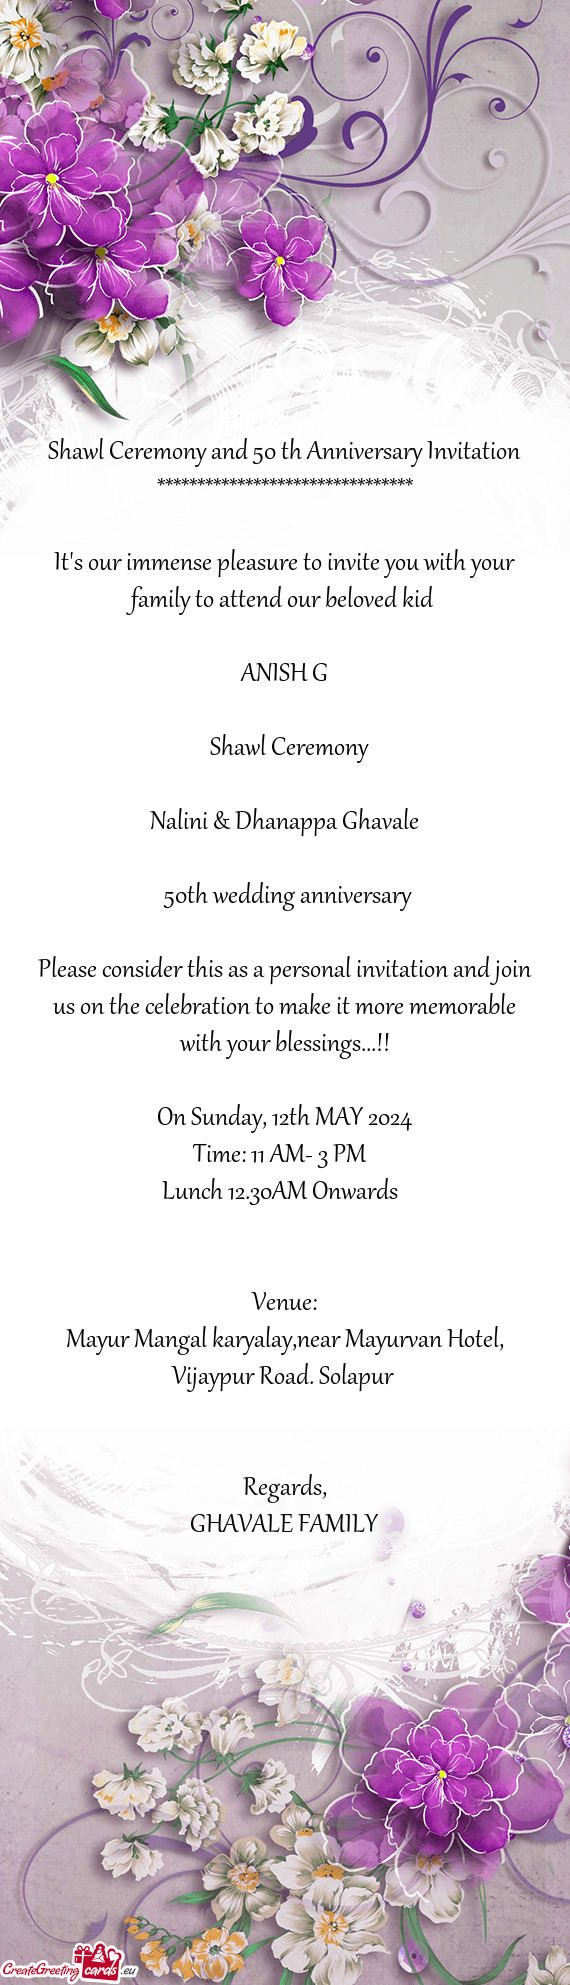 Shawl Ceremony and 50 th Anniversary Invitation